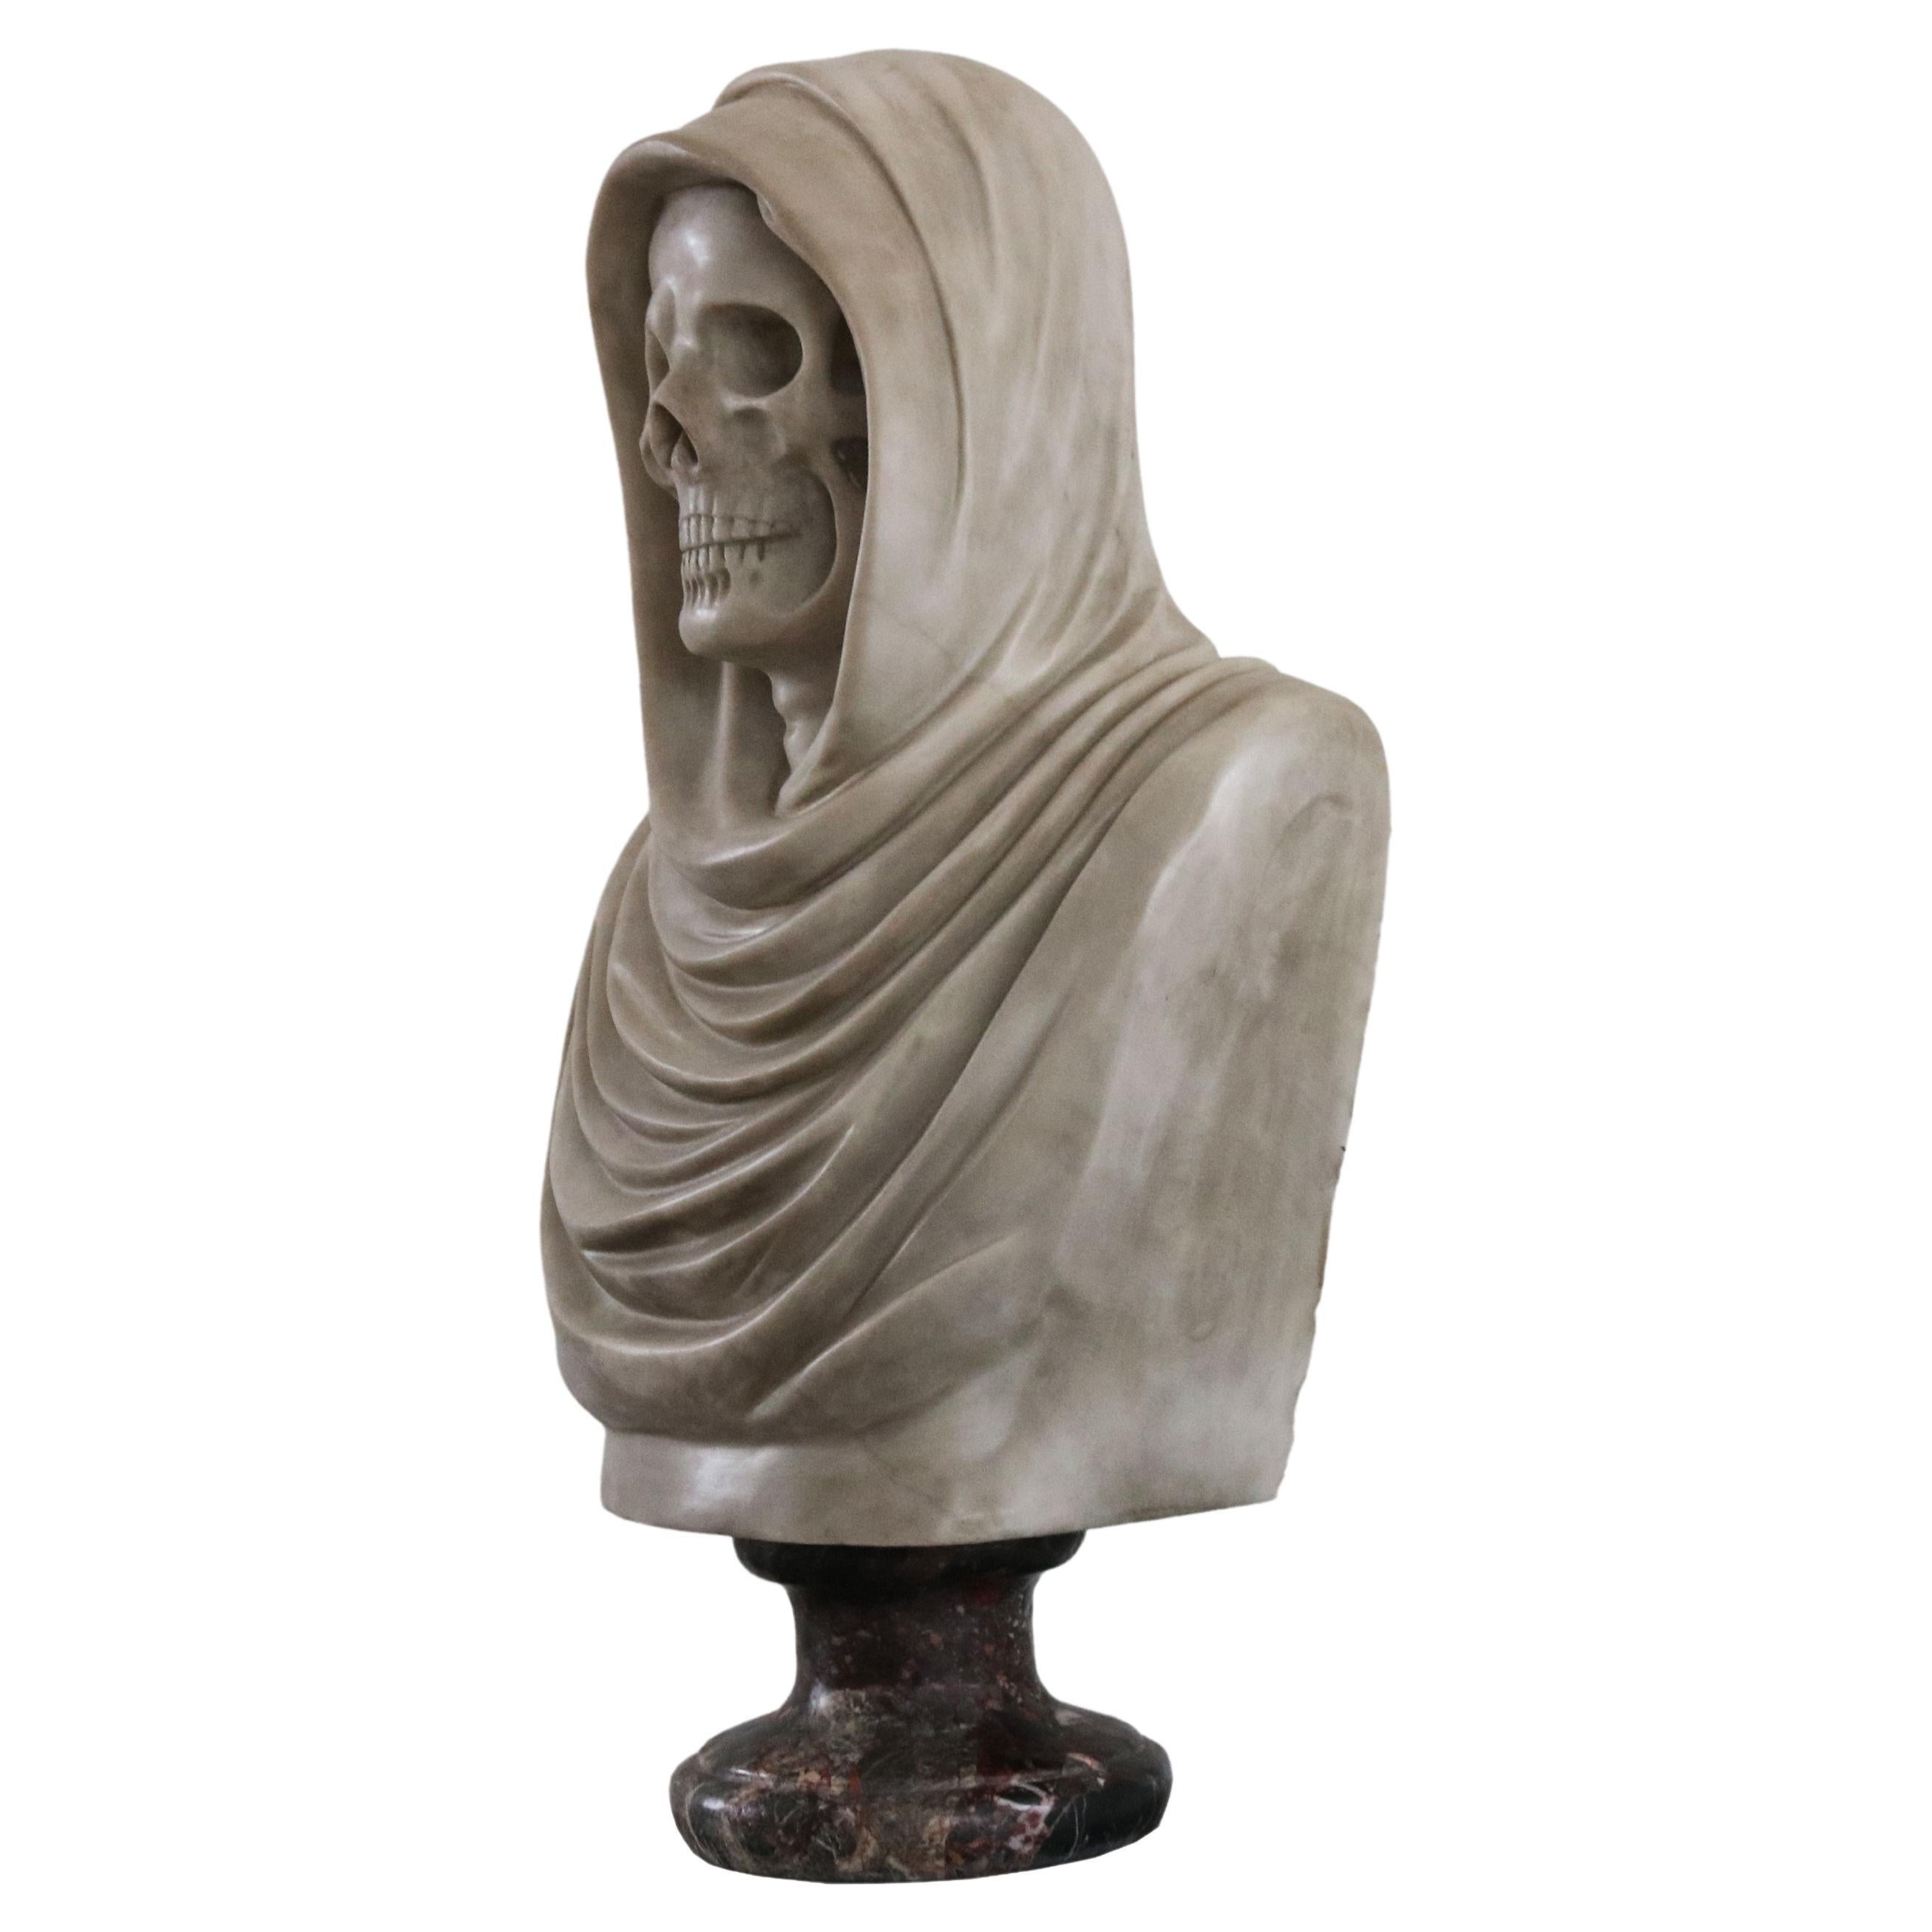 Rare 19th Century Italian Memento Mori Bust / Sculpture Carrara Marble Vanitas